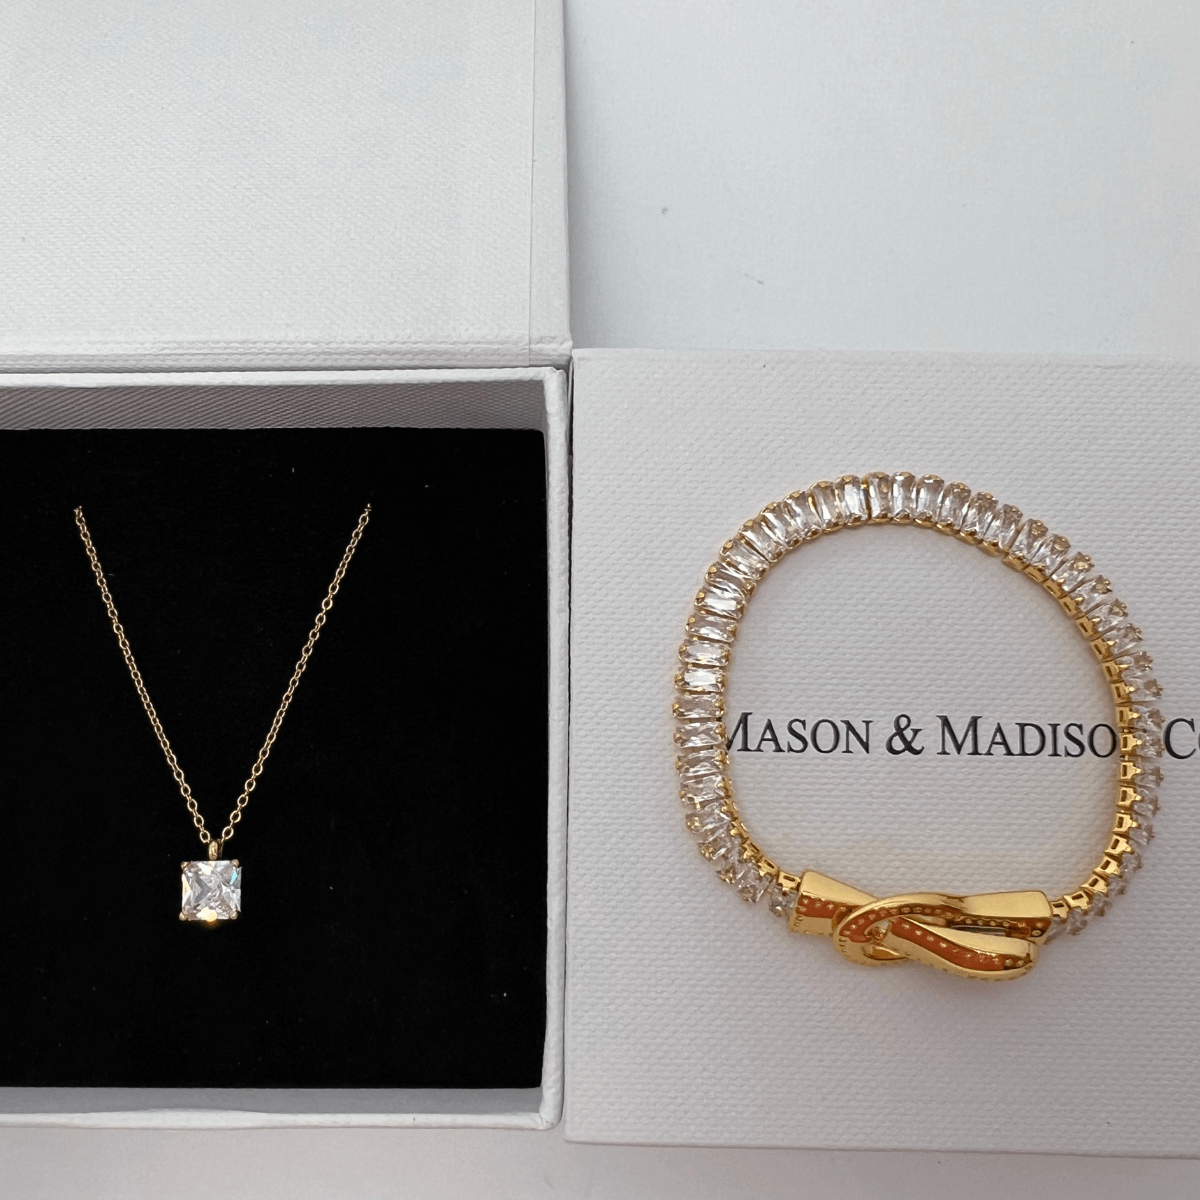 #1 Best Trendy Gold Diamond Pendant Necklace Bracelet Jewelry Bundle Set Gift for Women | Best Trending Aesthetic Yellow Gold Diamond Pendant Necklace, Bracelet Jewelry Gift for Women, Mother, Wife, Daughter | Mason & Madison Co.